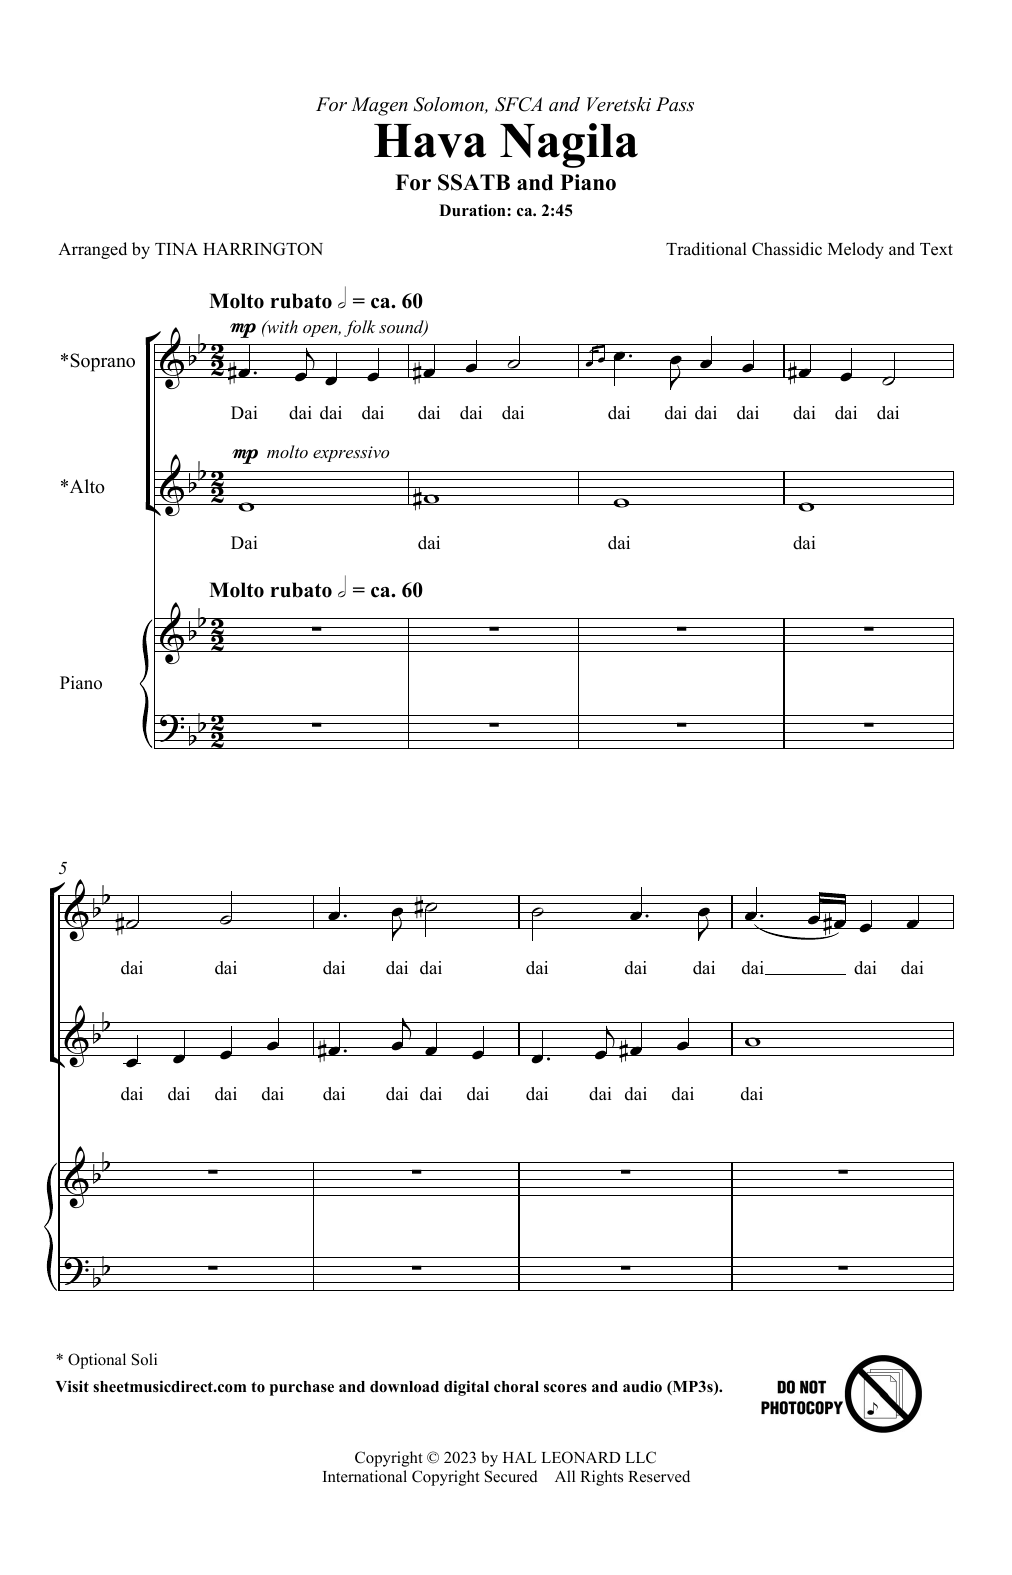 Tina Harrington Hava Nagila Sheet Music Notes & Chords for Choir - Download or Print PDF